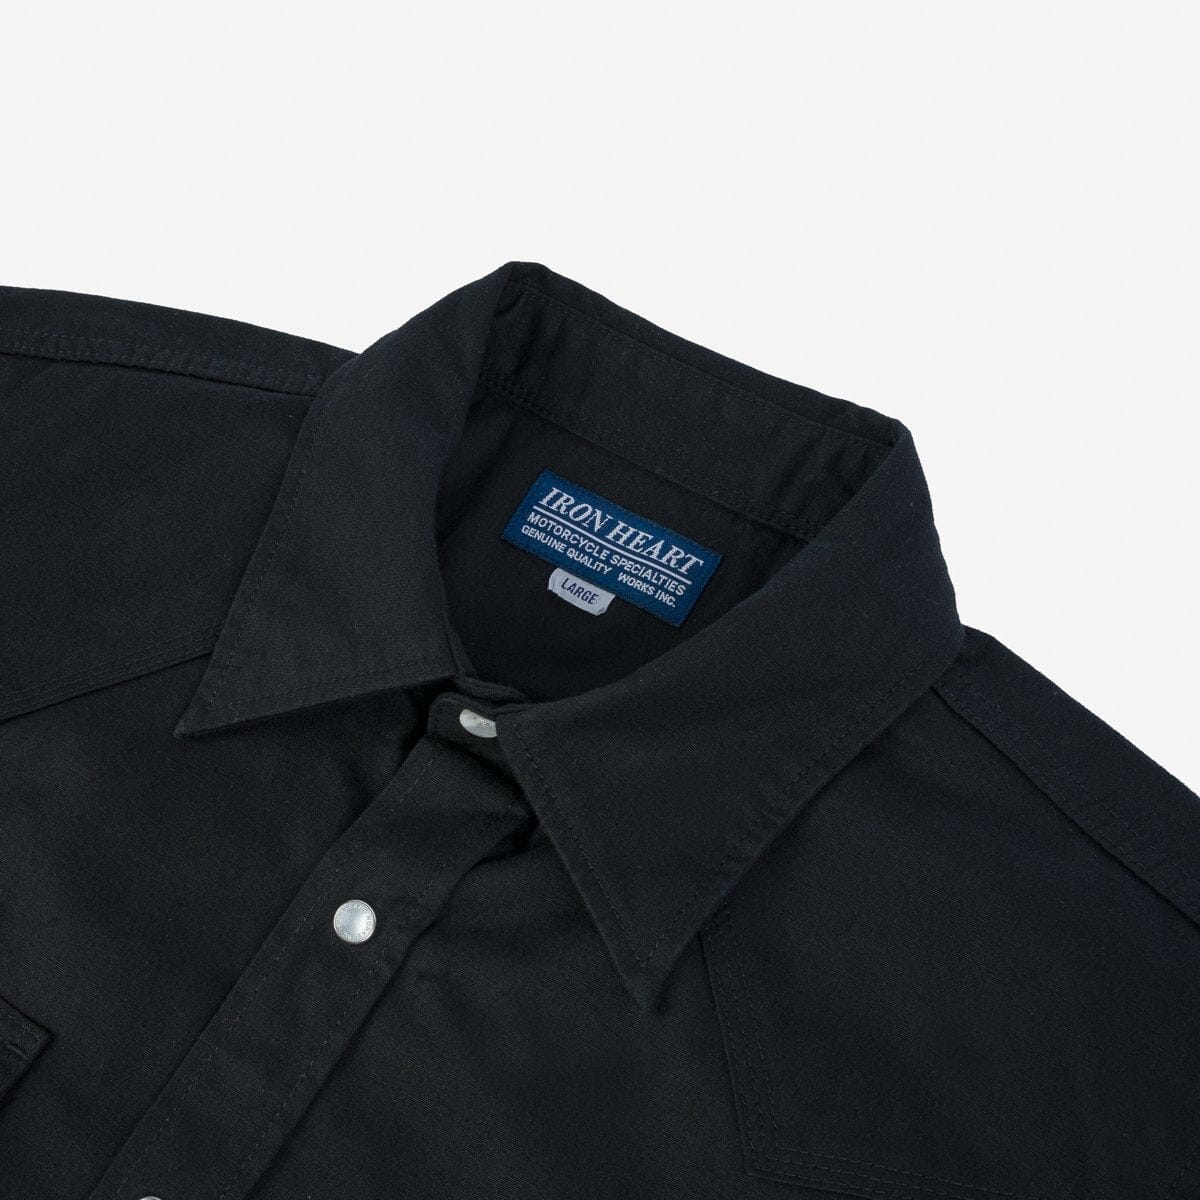 Iron Heart - IHSH-387-BLK - 7oz Fatigue Cloth Short Sleeved Western Shirt - Black - City Workshop Men's Supply Co.